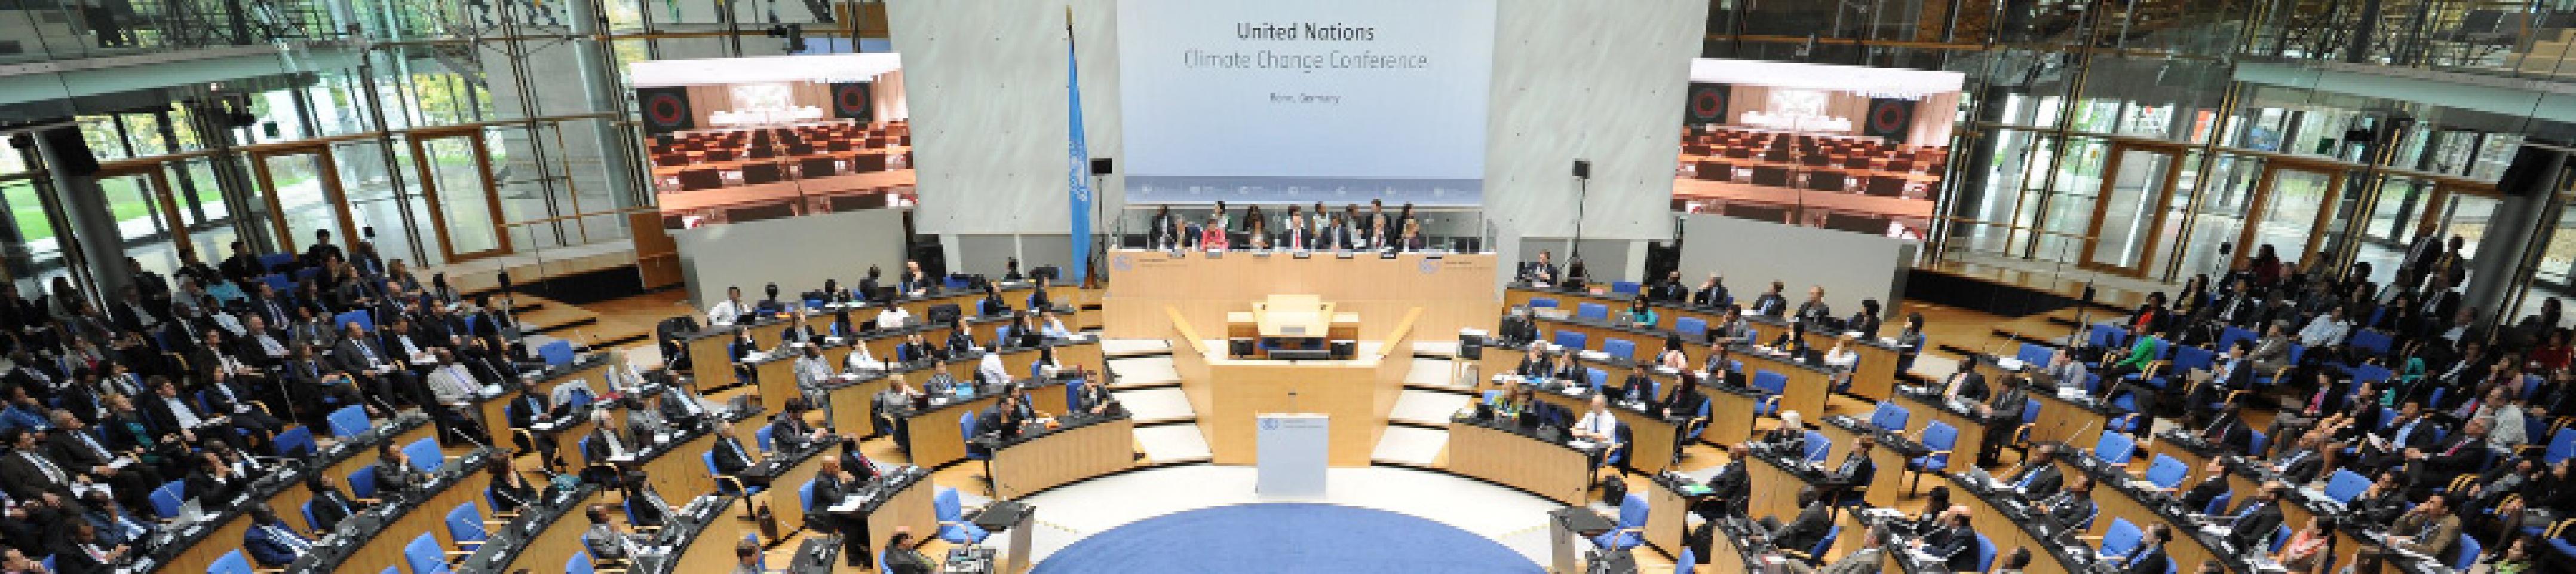 UNFCCC plenary room